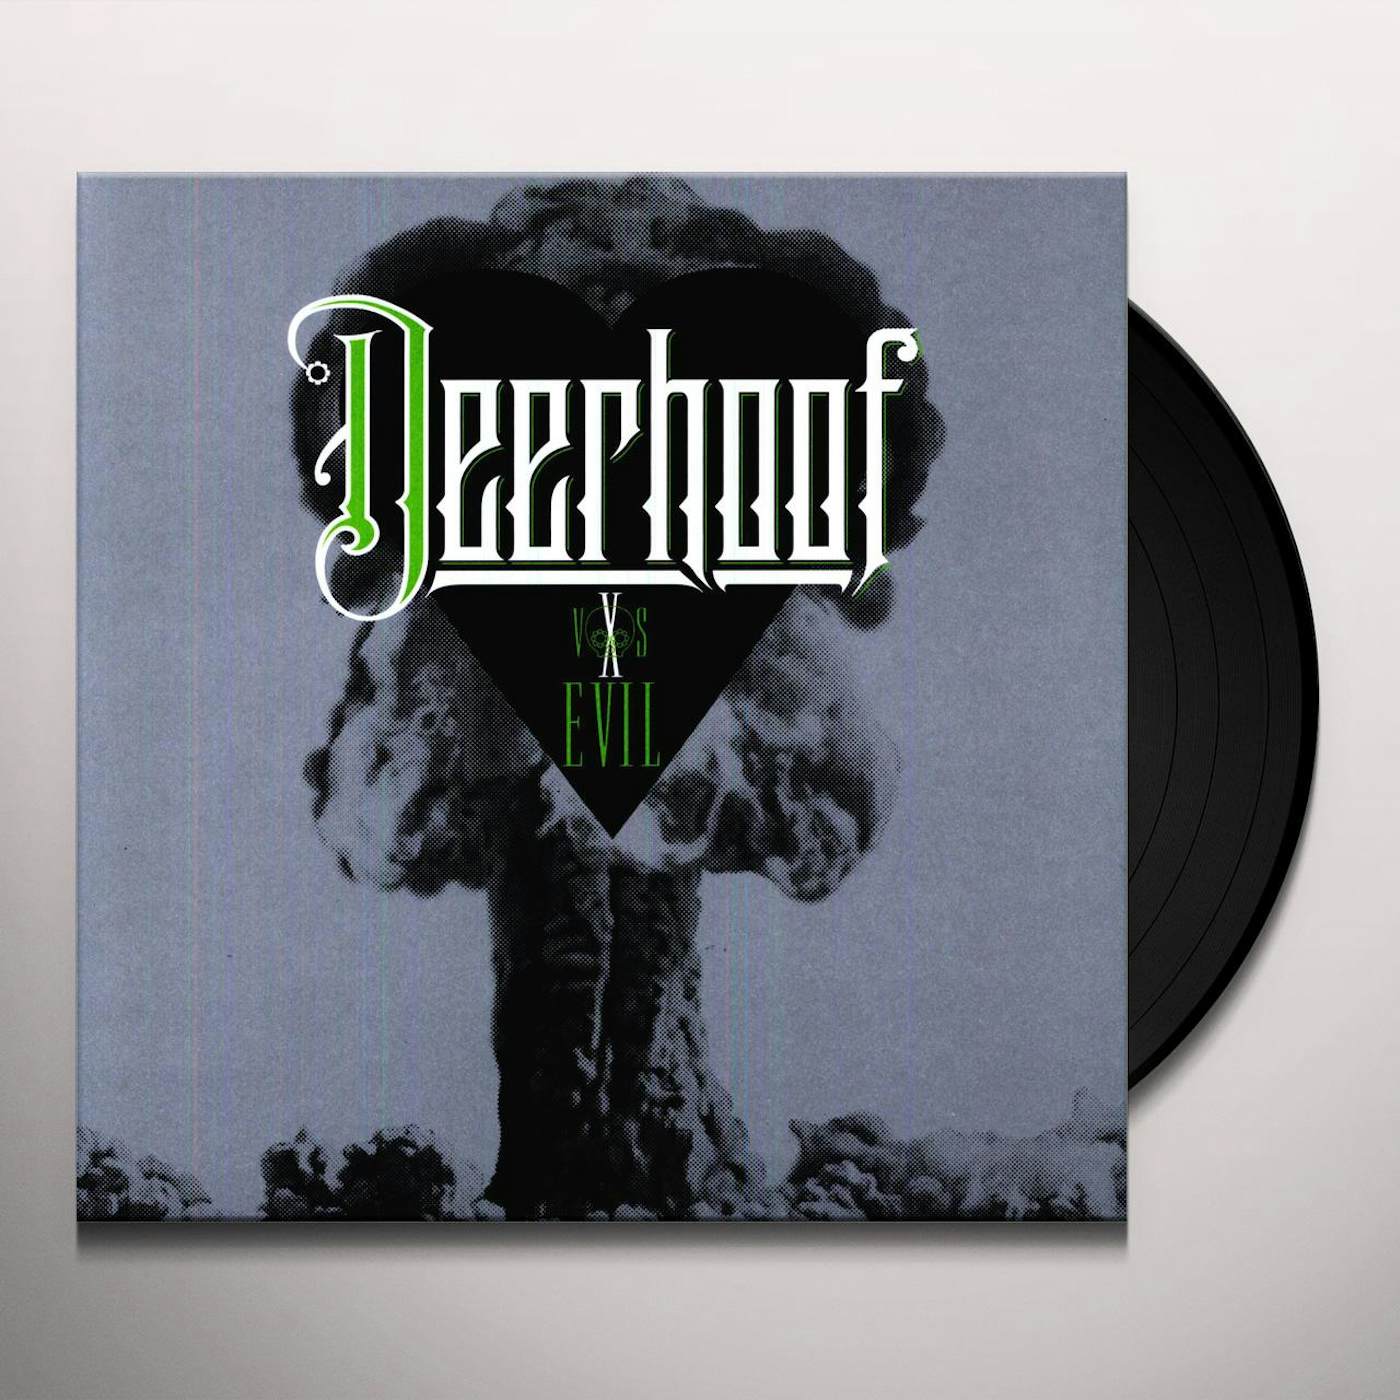 DEERHOOF VS EVIL Vinyl Record